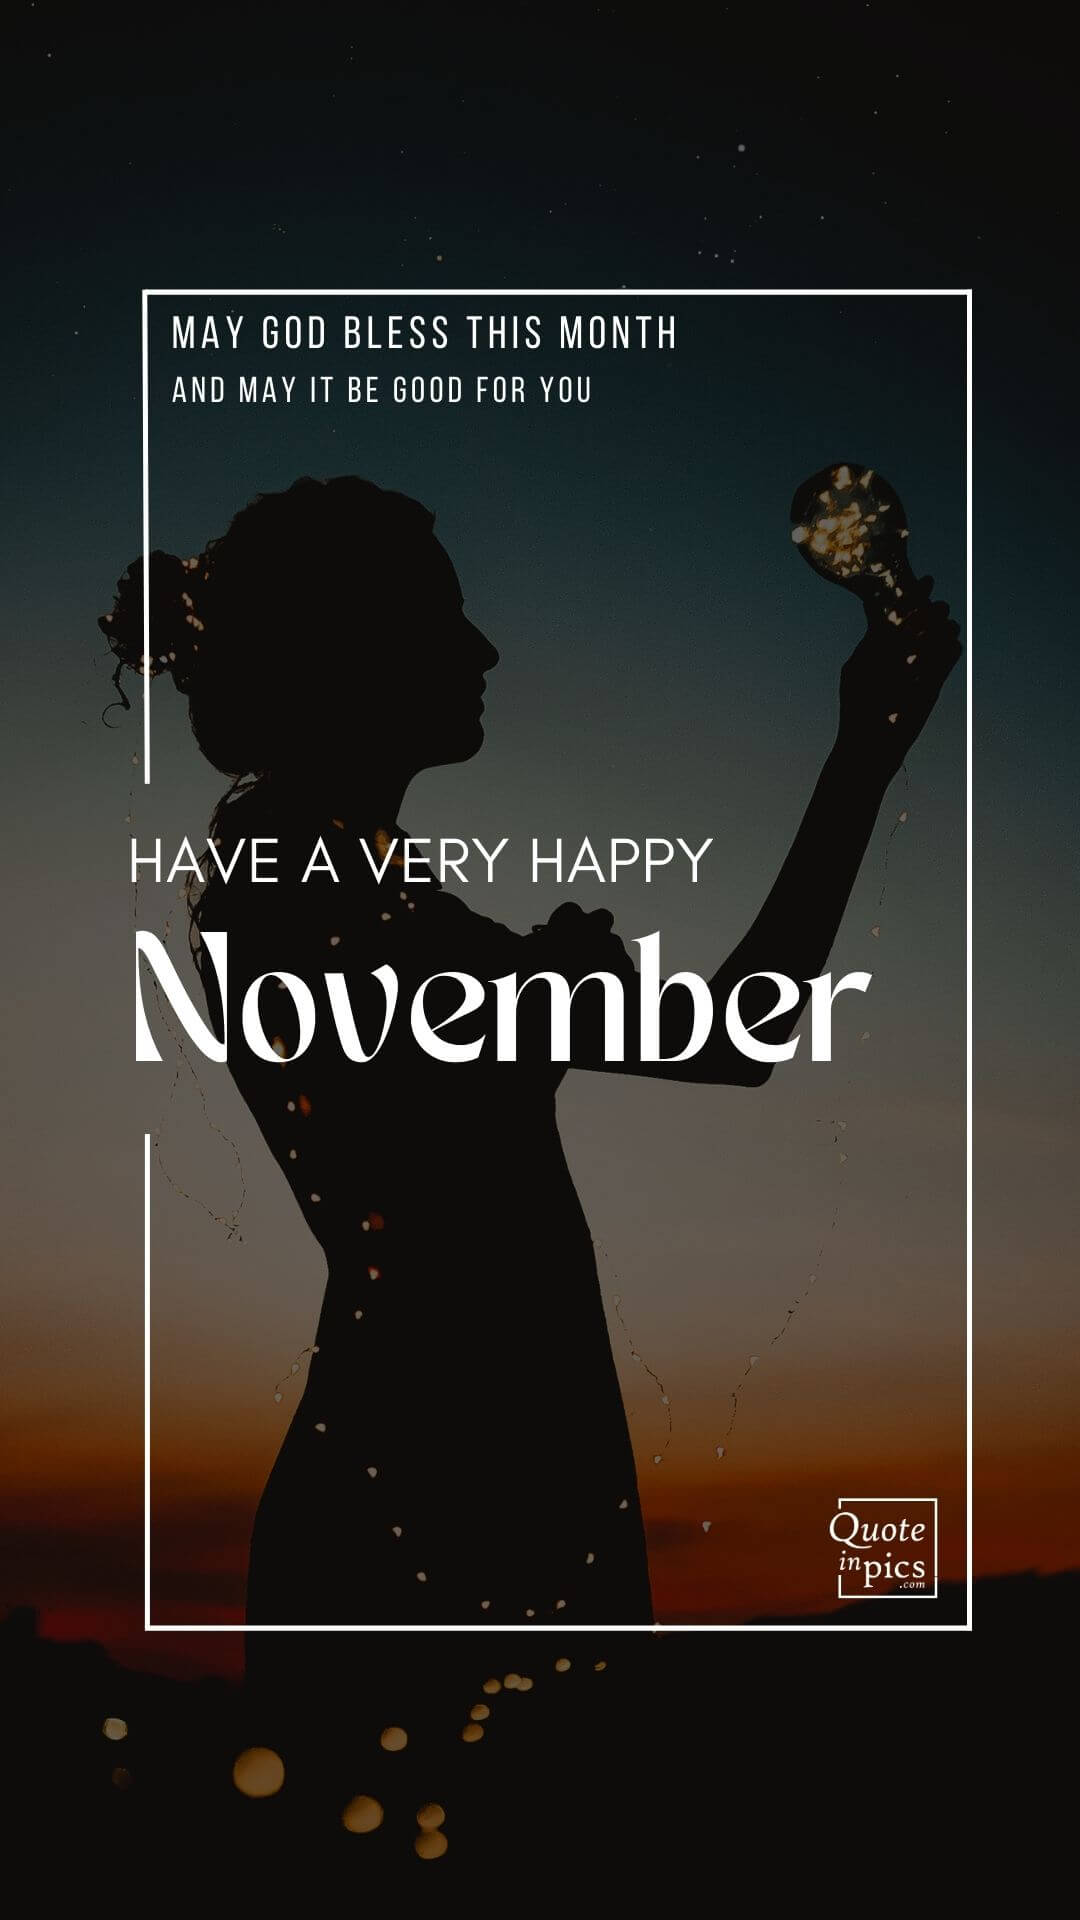 Have a very happy november!